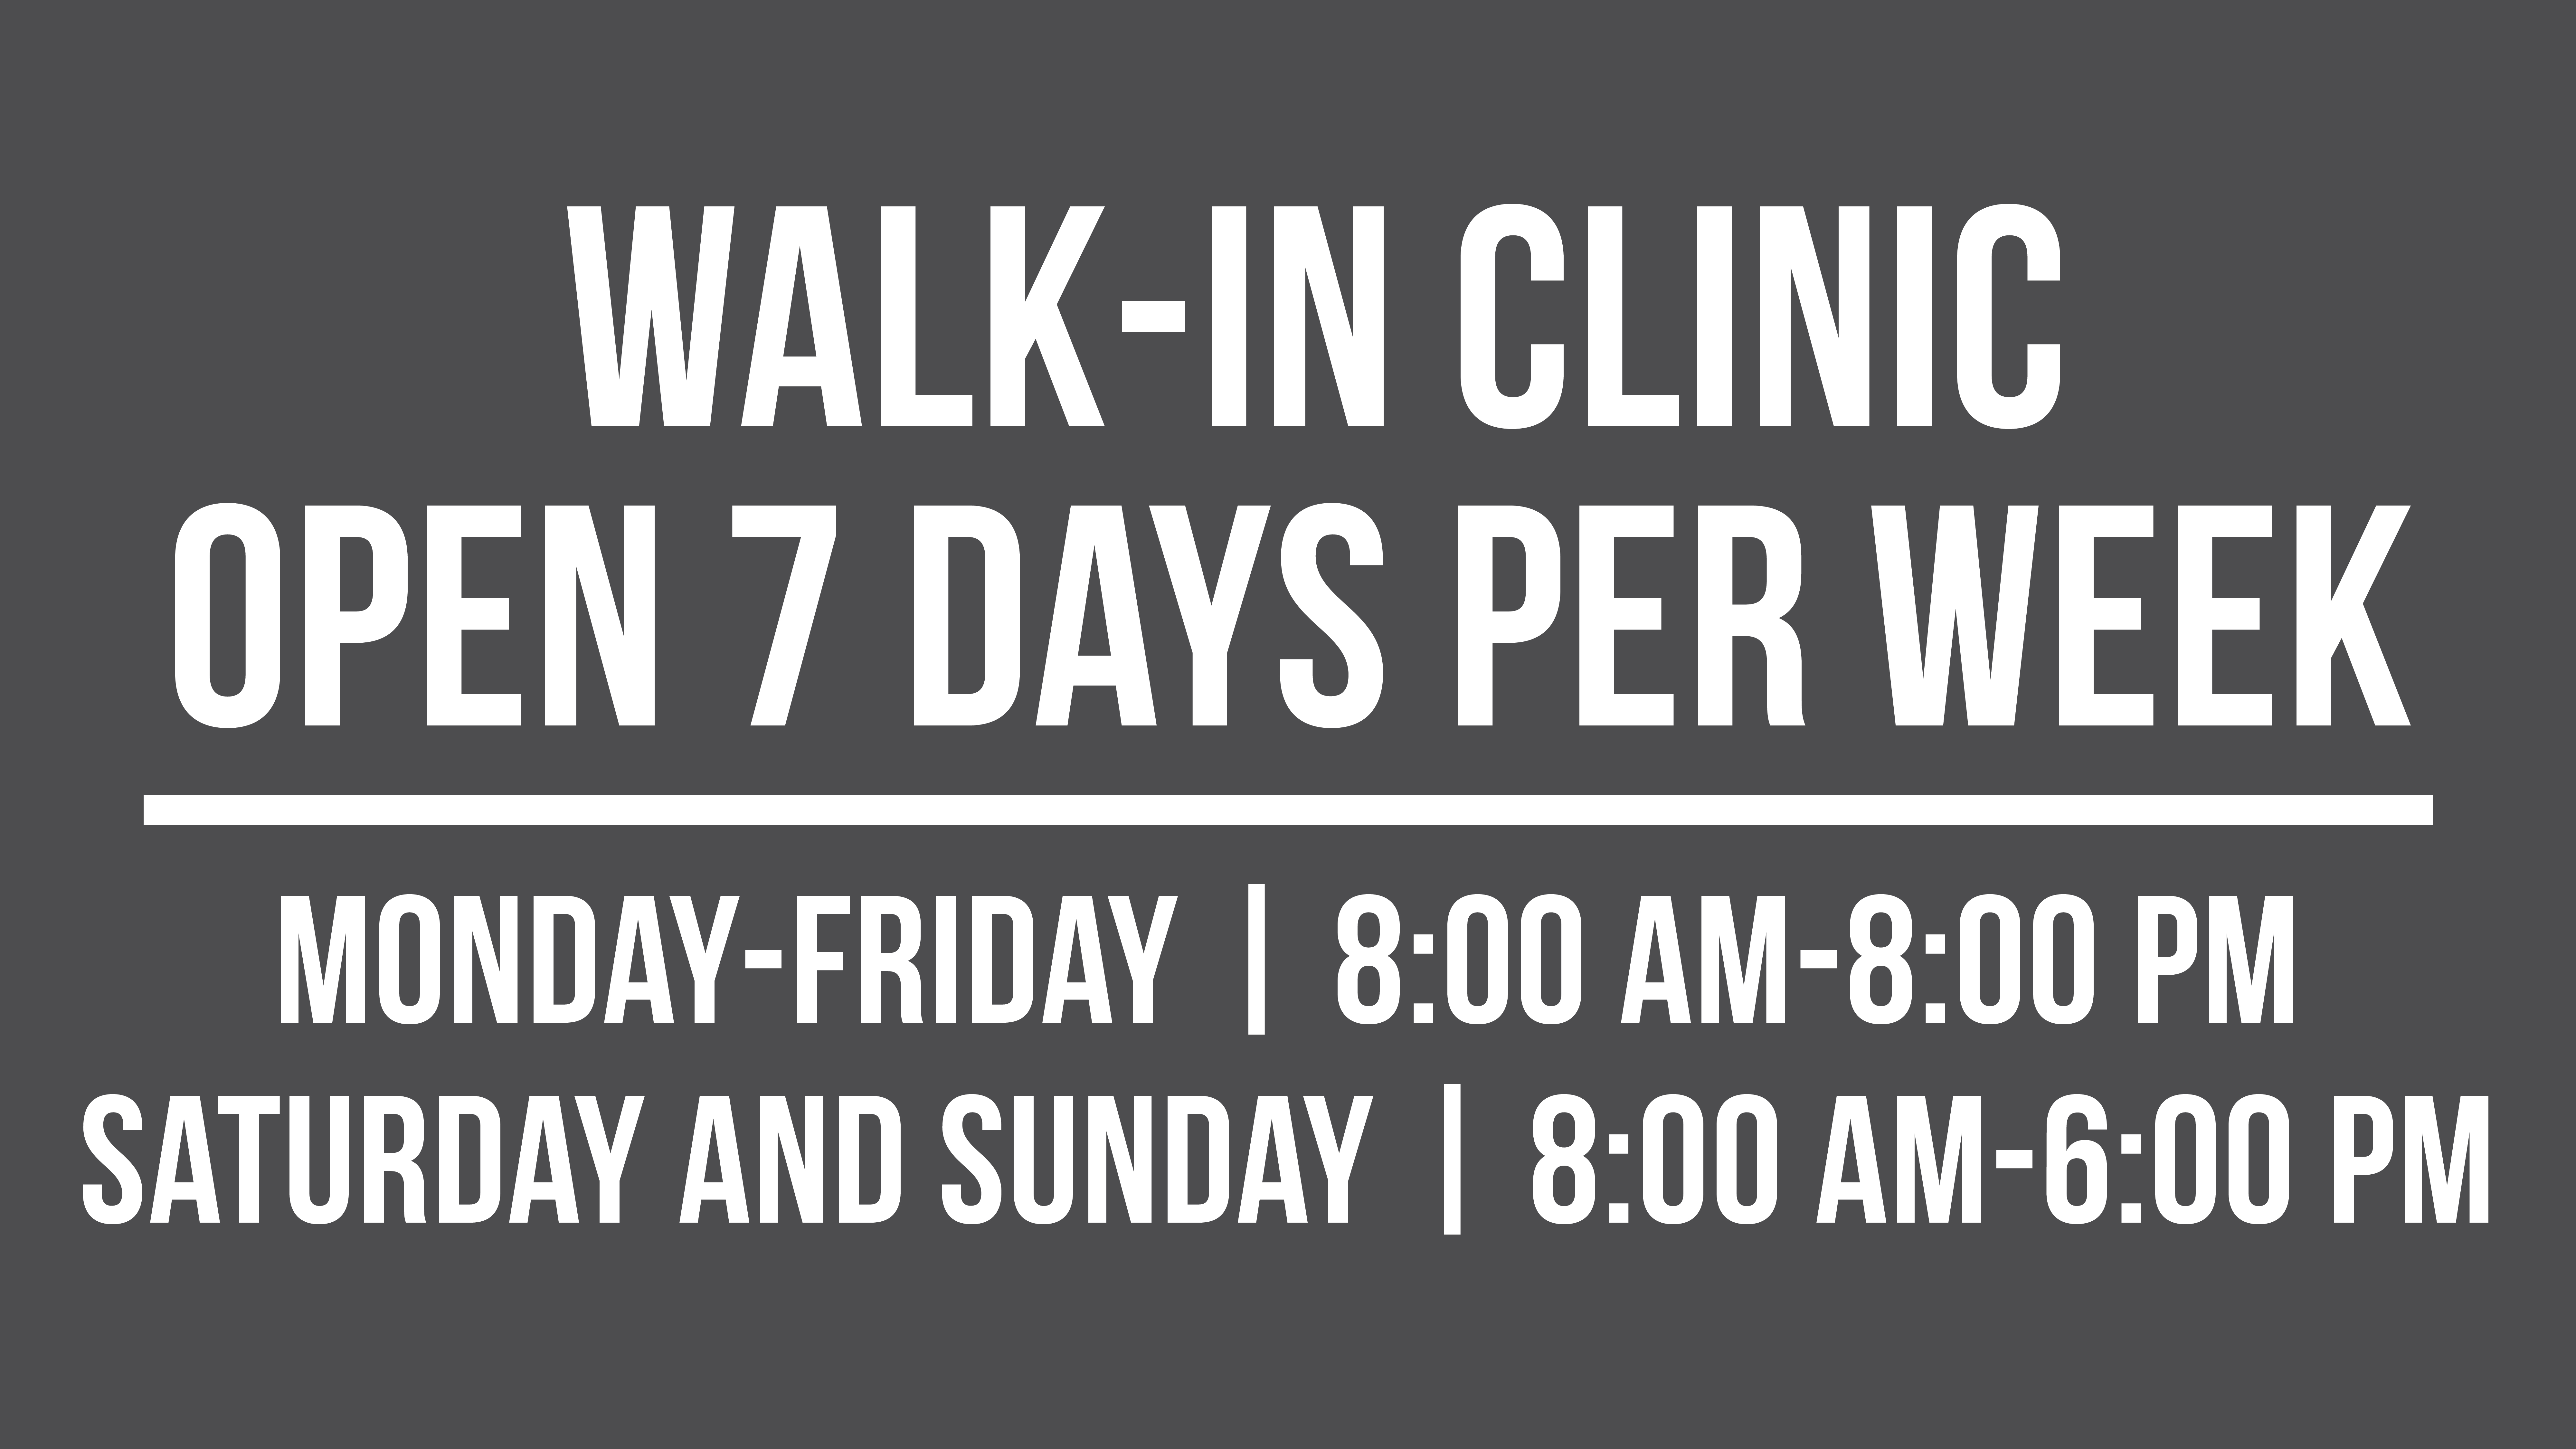 Walk-In Clinic Hours